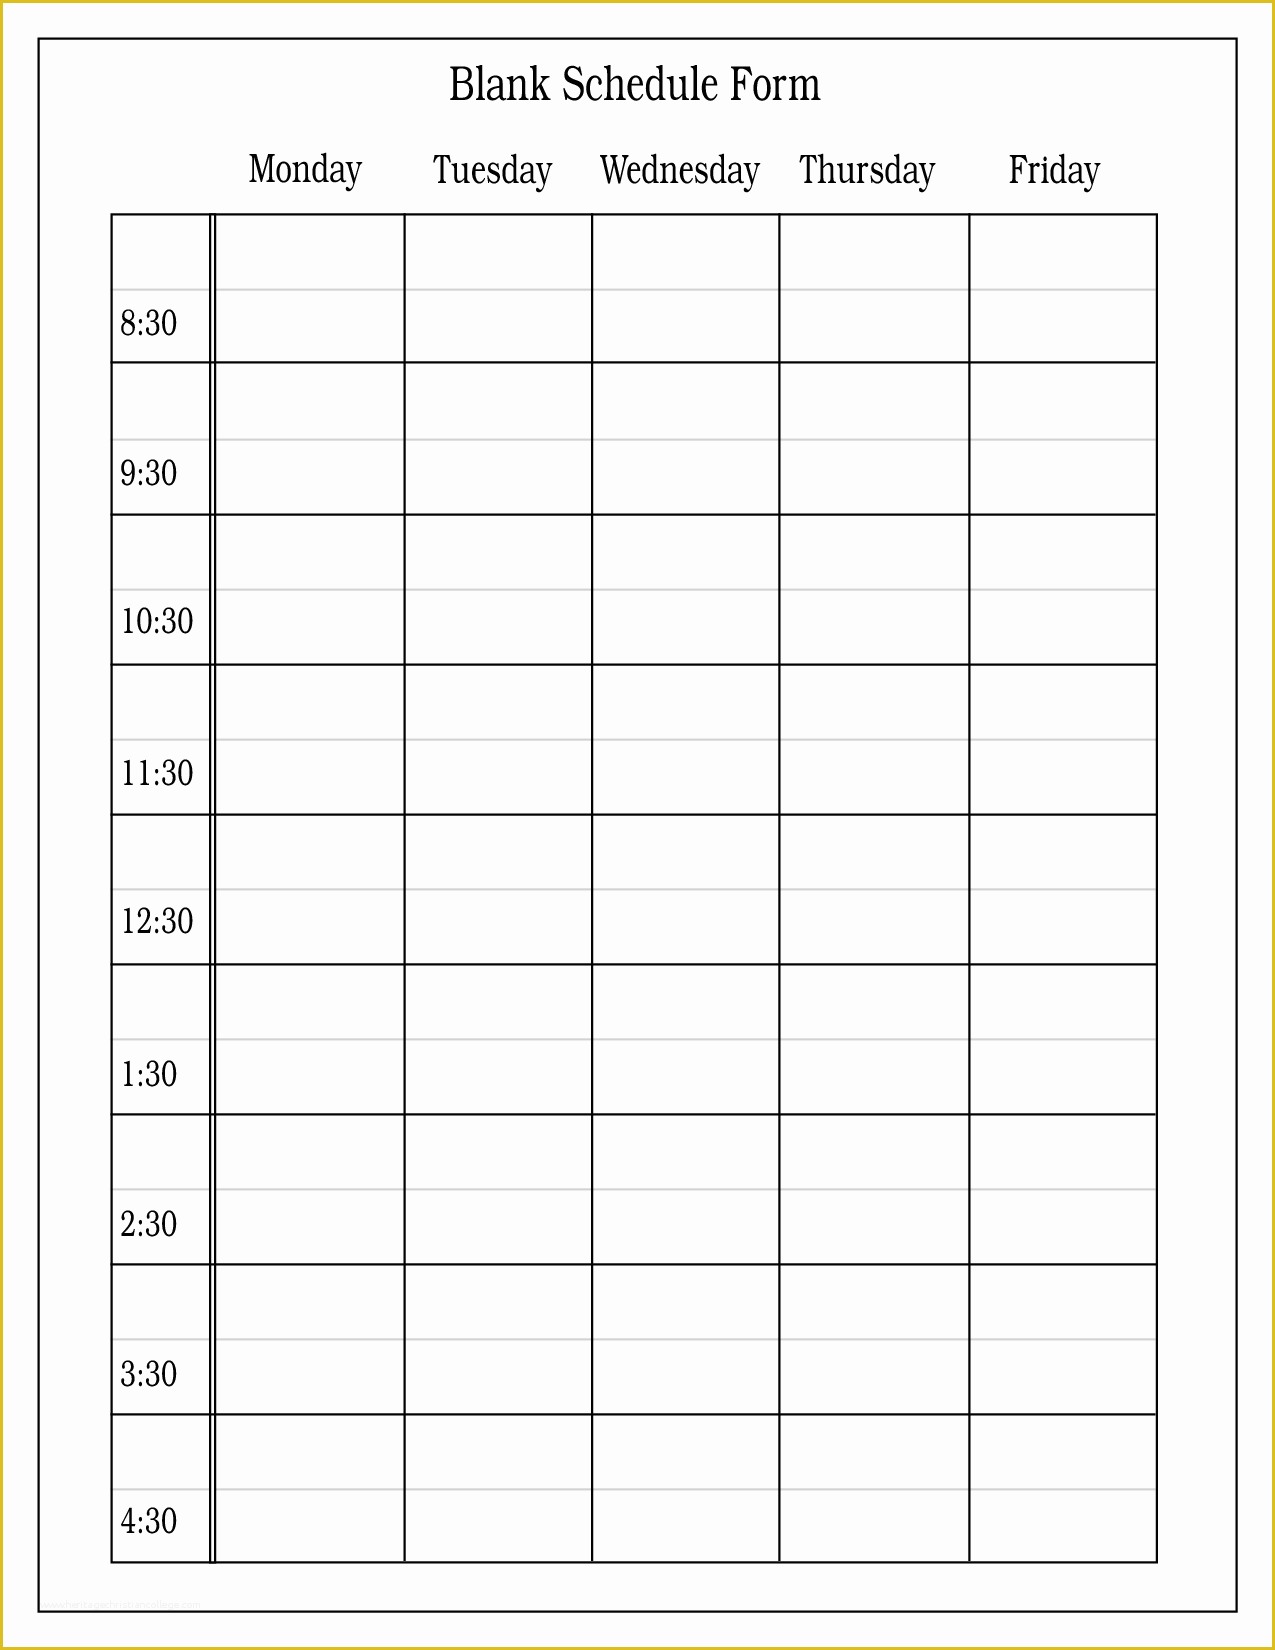 Free Scheduling Calendar Template Of Employee Scheduling A Free Employee Schedule